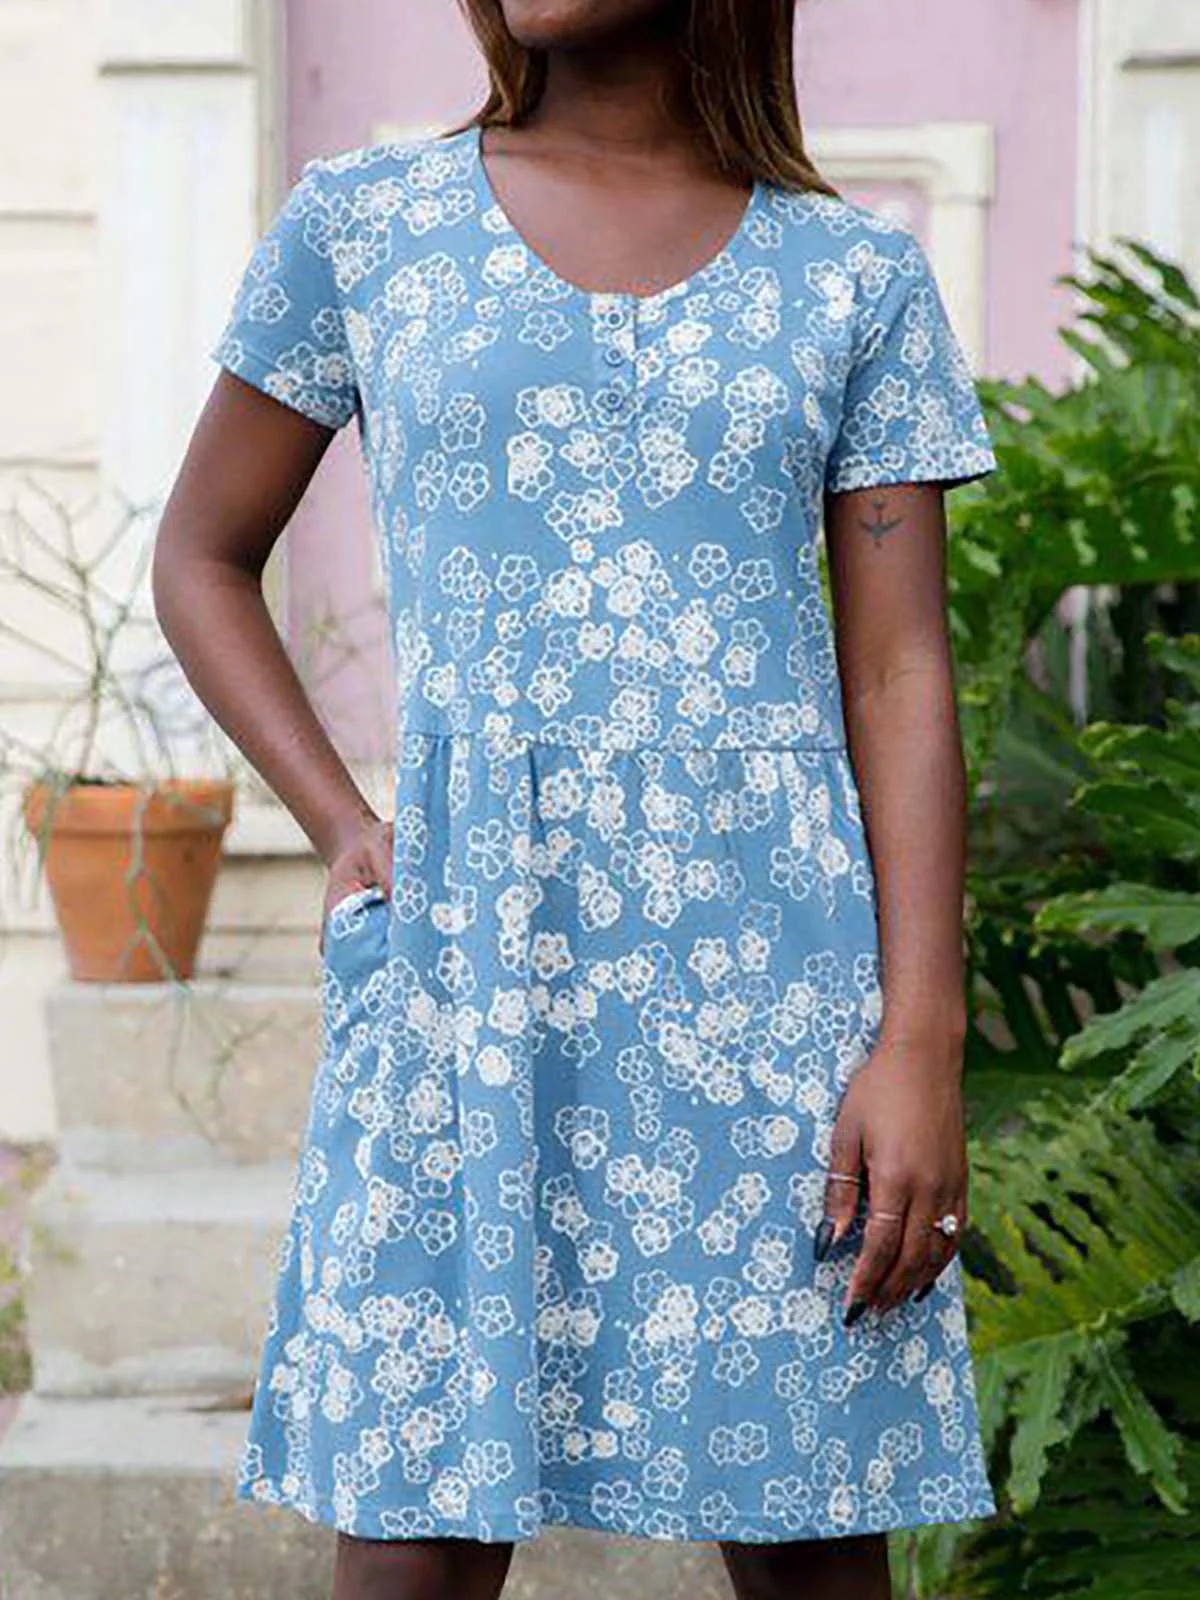 Boho Blue White Floral-print Short Sleeve Pocket Casual Knitting Dress